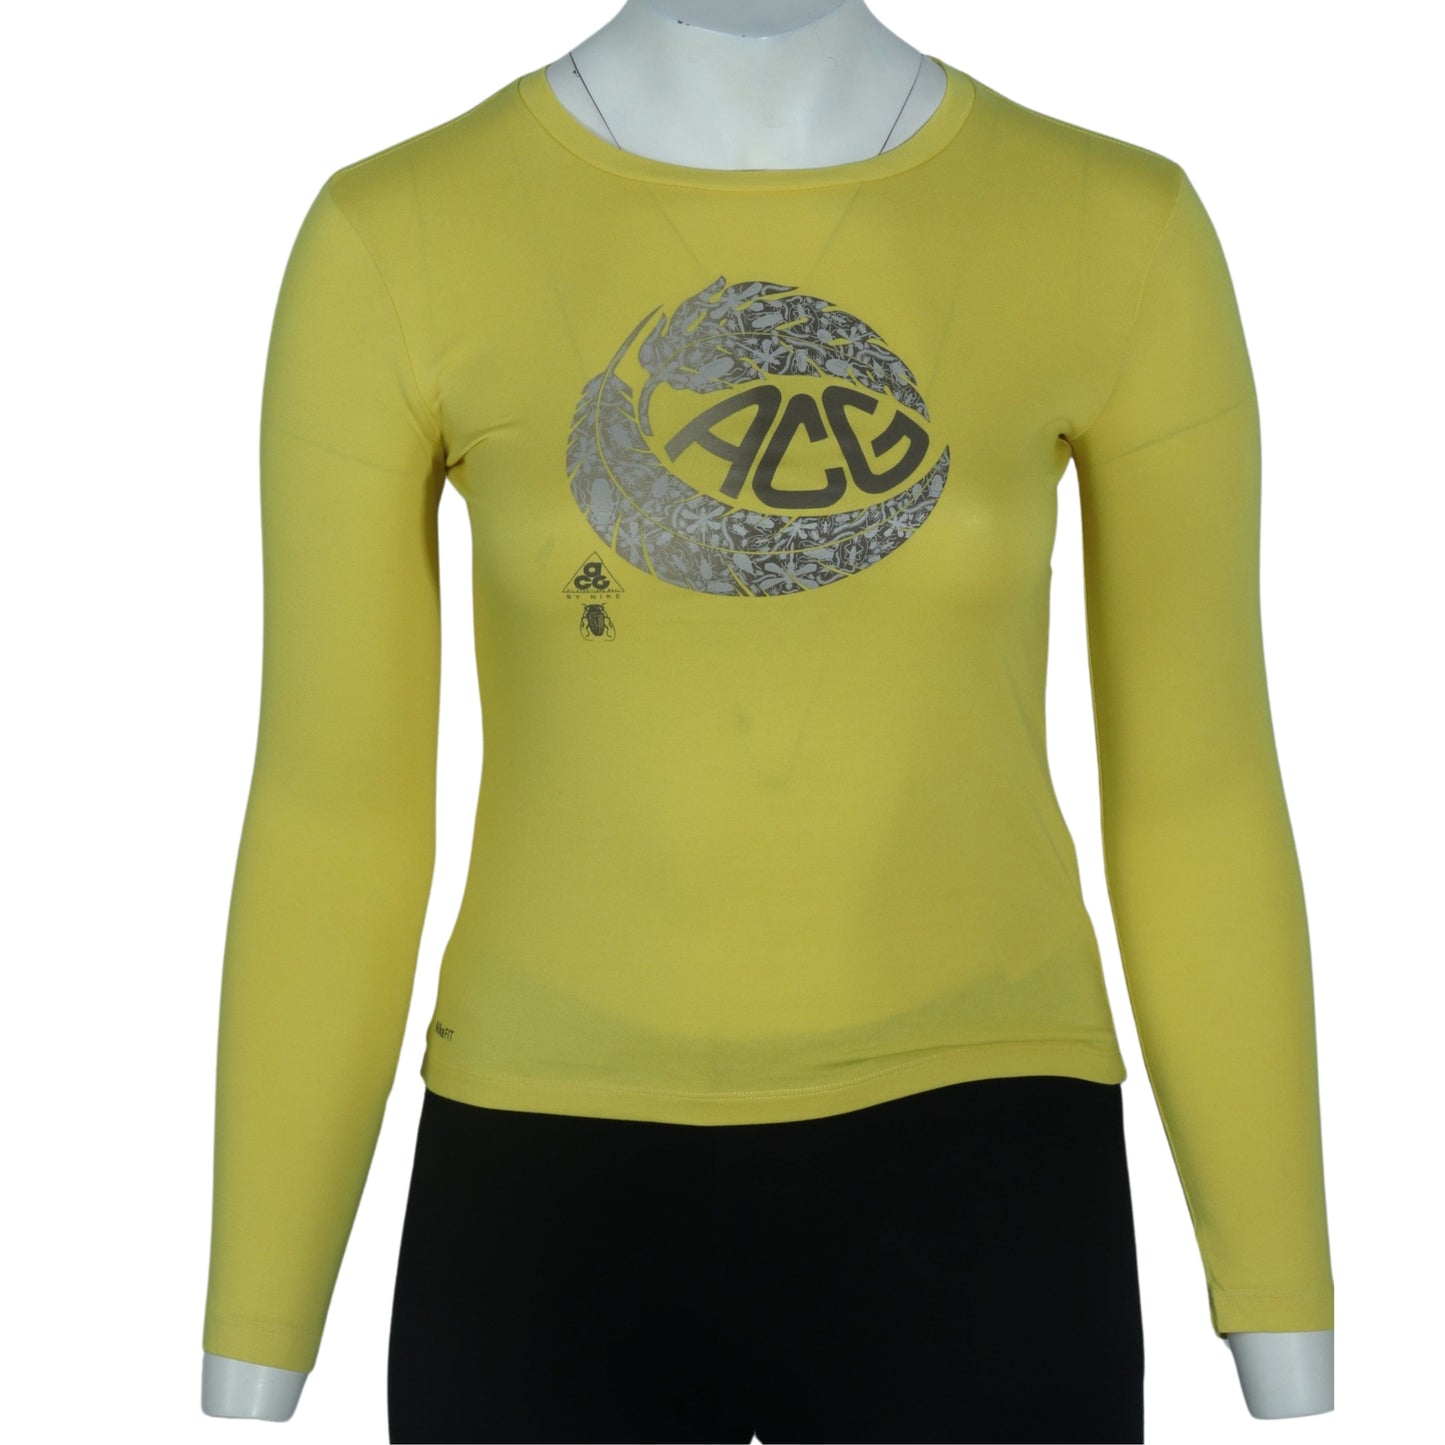 NIKE Womens Tops S / Yellow NIKE - Graphic T-Shirt